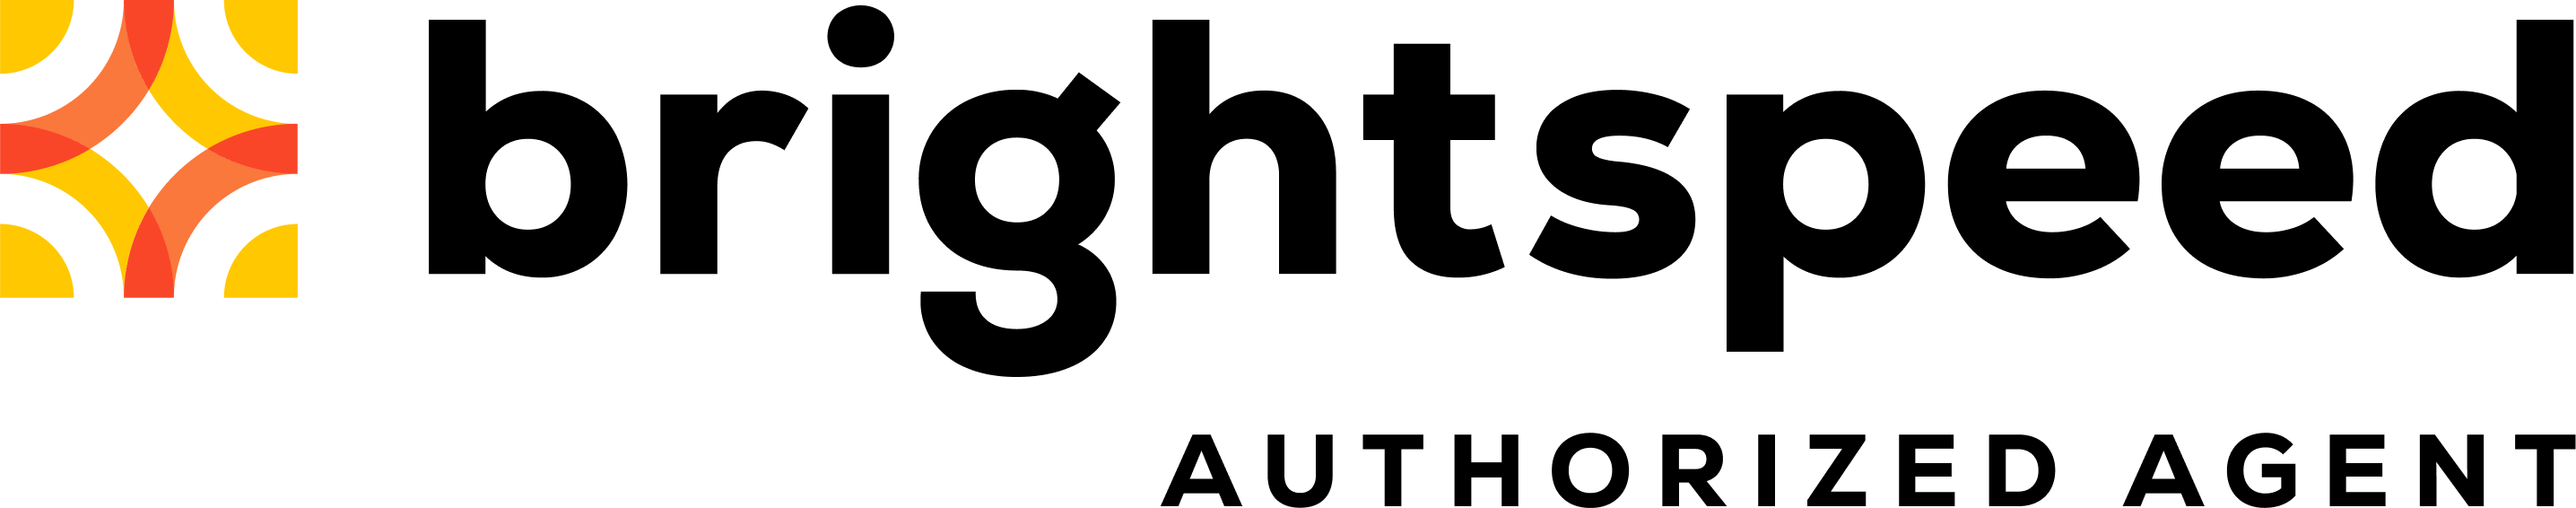 Brightspeed Internet, TV & Phone Services Logo